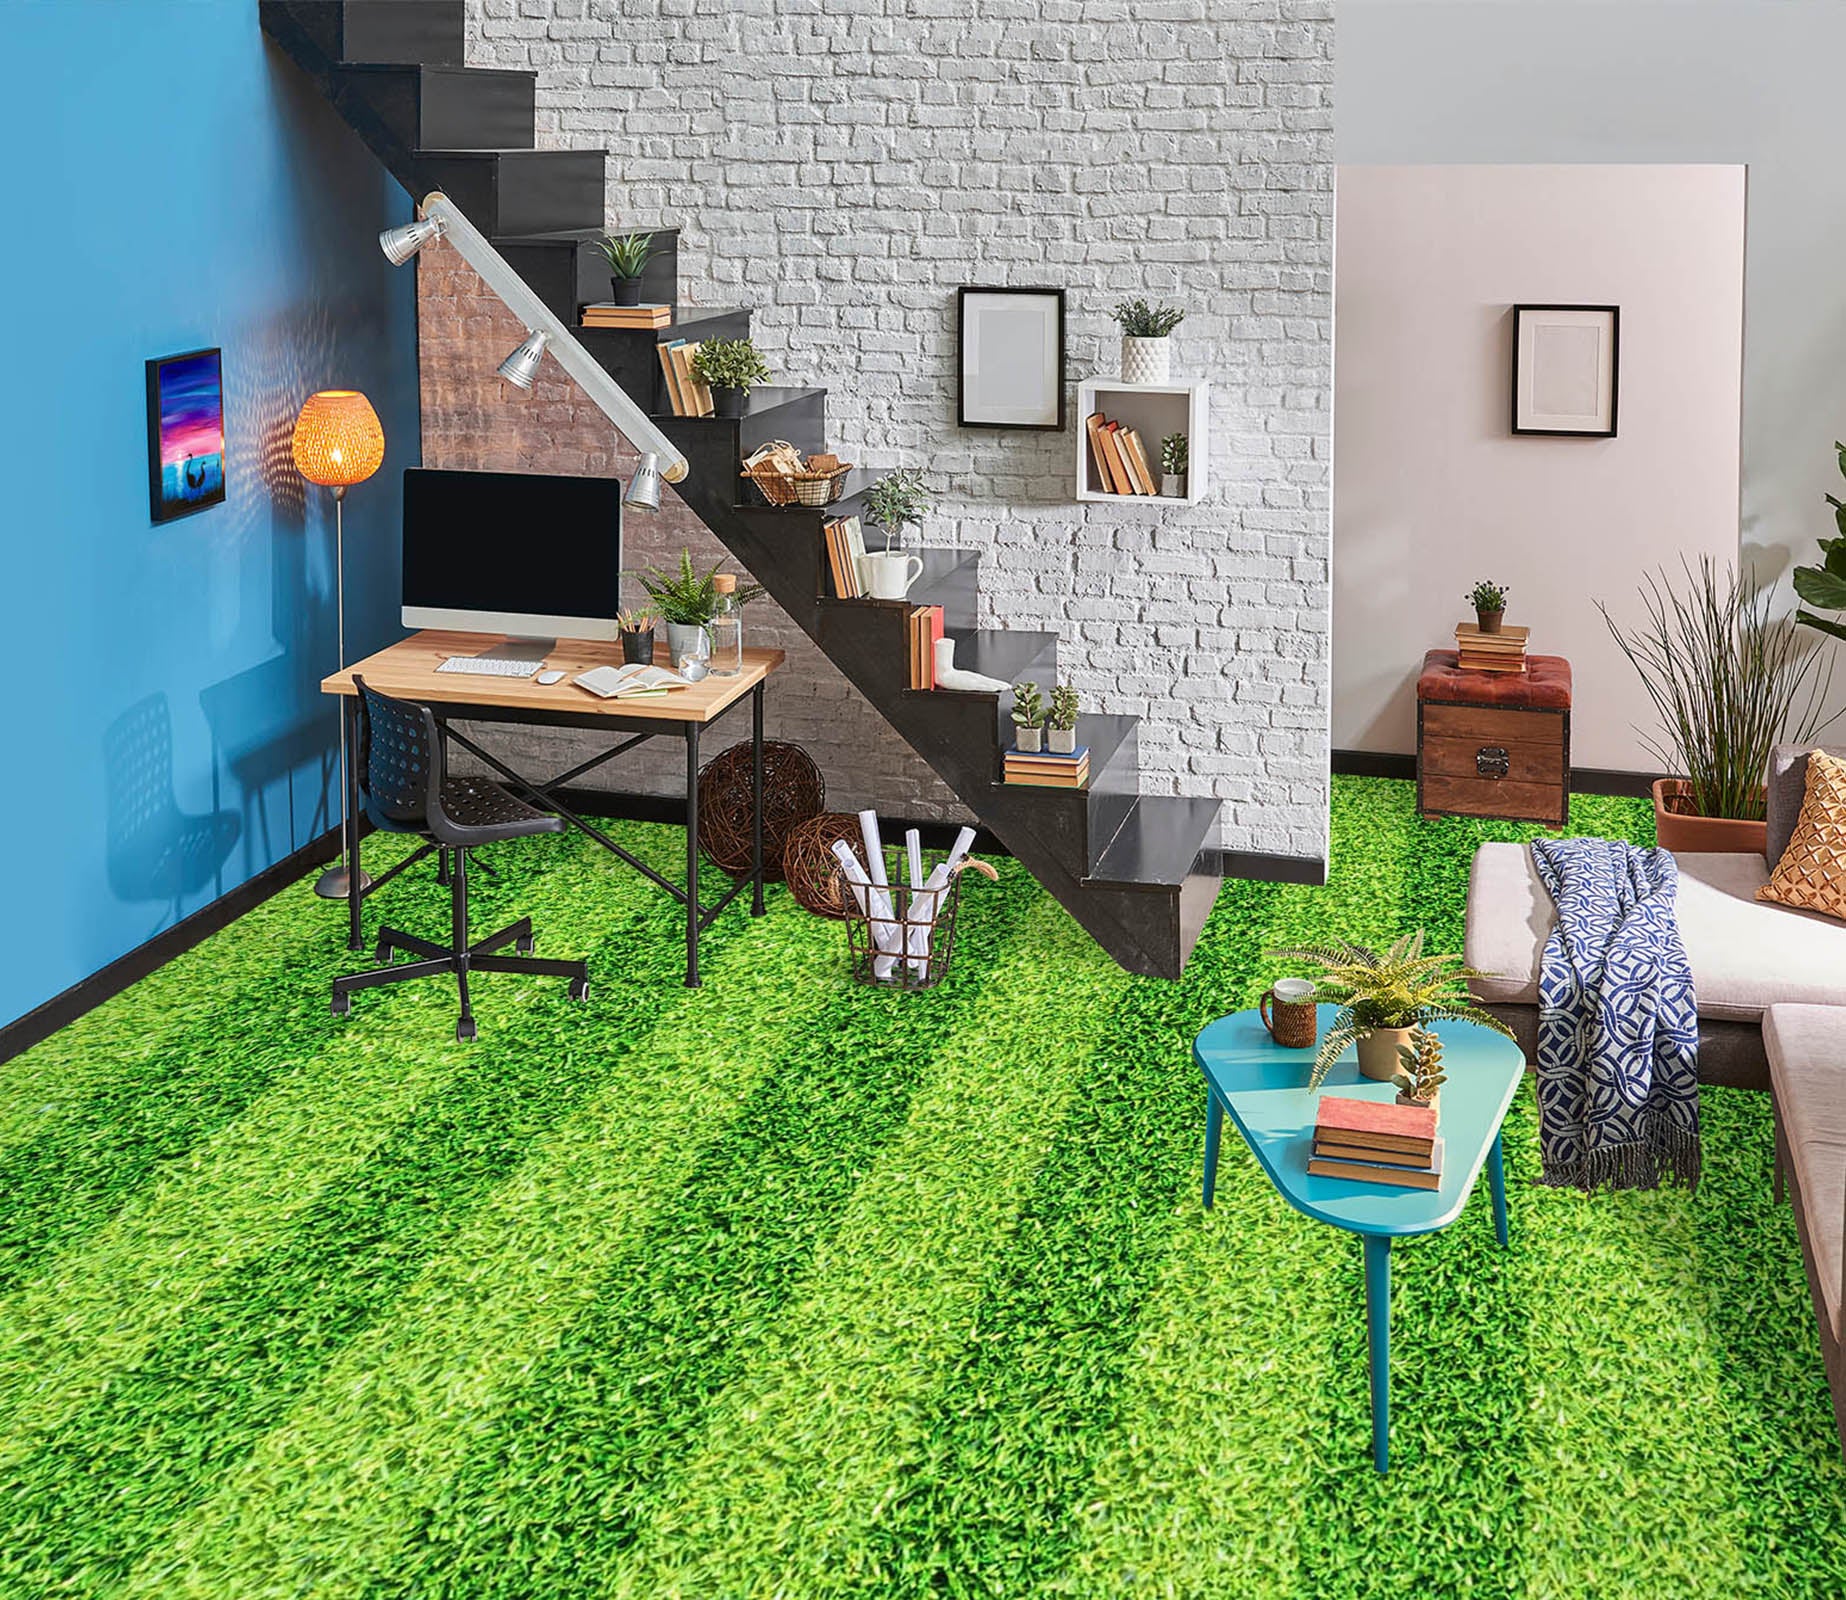 3D Comfortable Green Grass 1378 Floor Mural  Wallpaper Murals Self-Adhesive Removable Print Epoxy